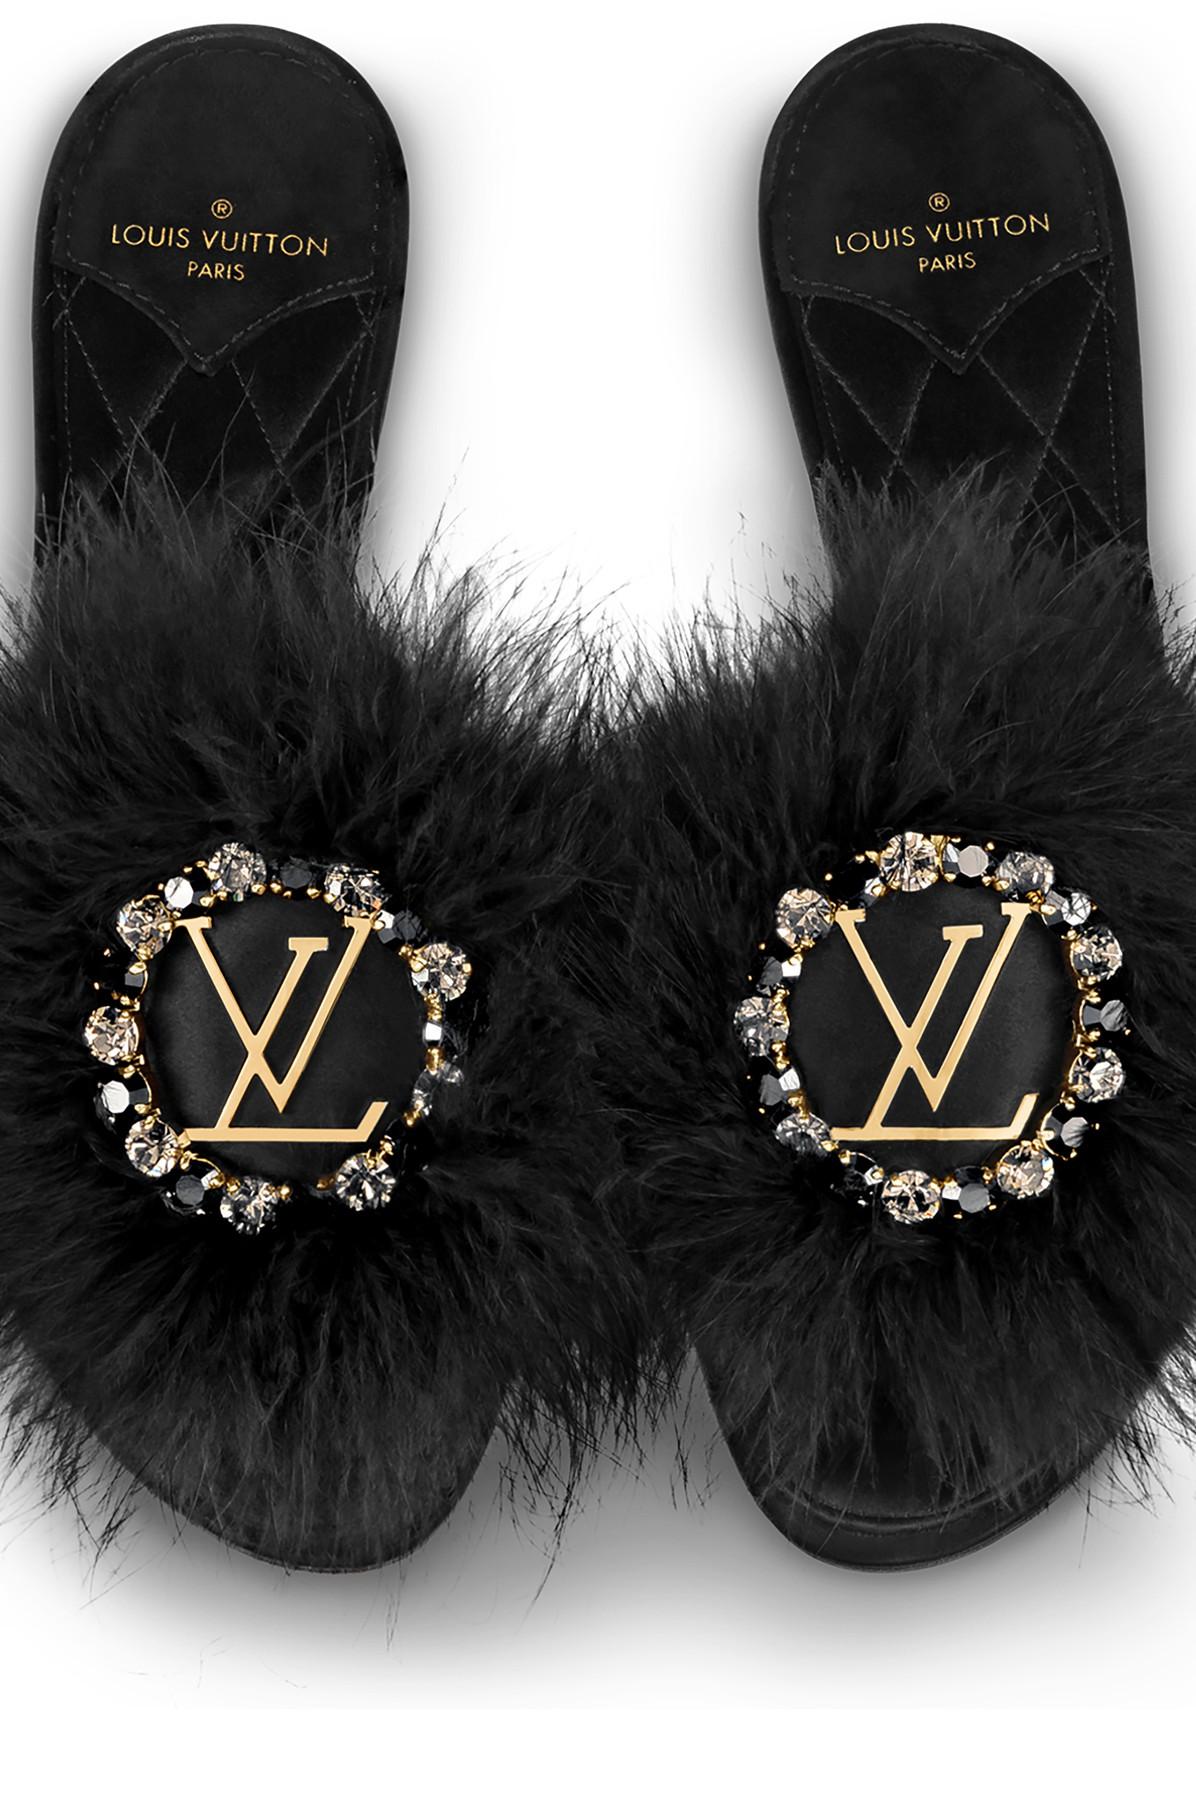 Louis Vuitton - LV Isola Flat Mules - Black - Women - Size: 38.0 - Luxury